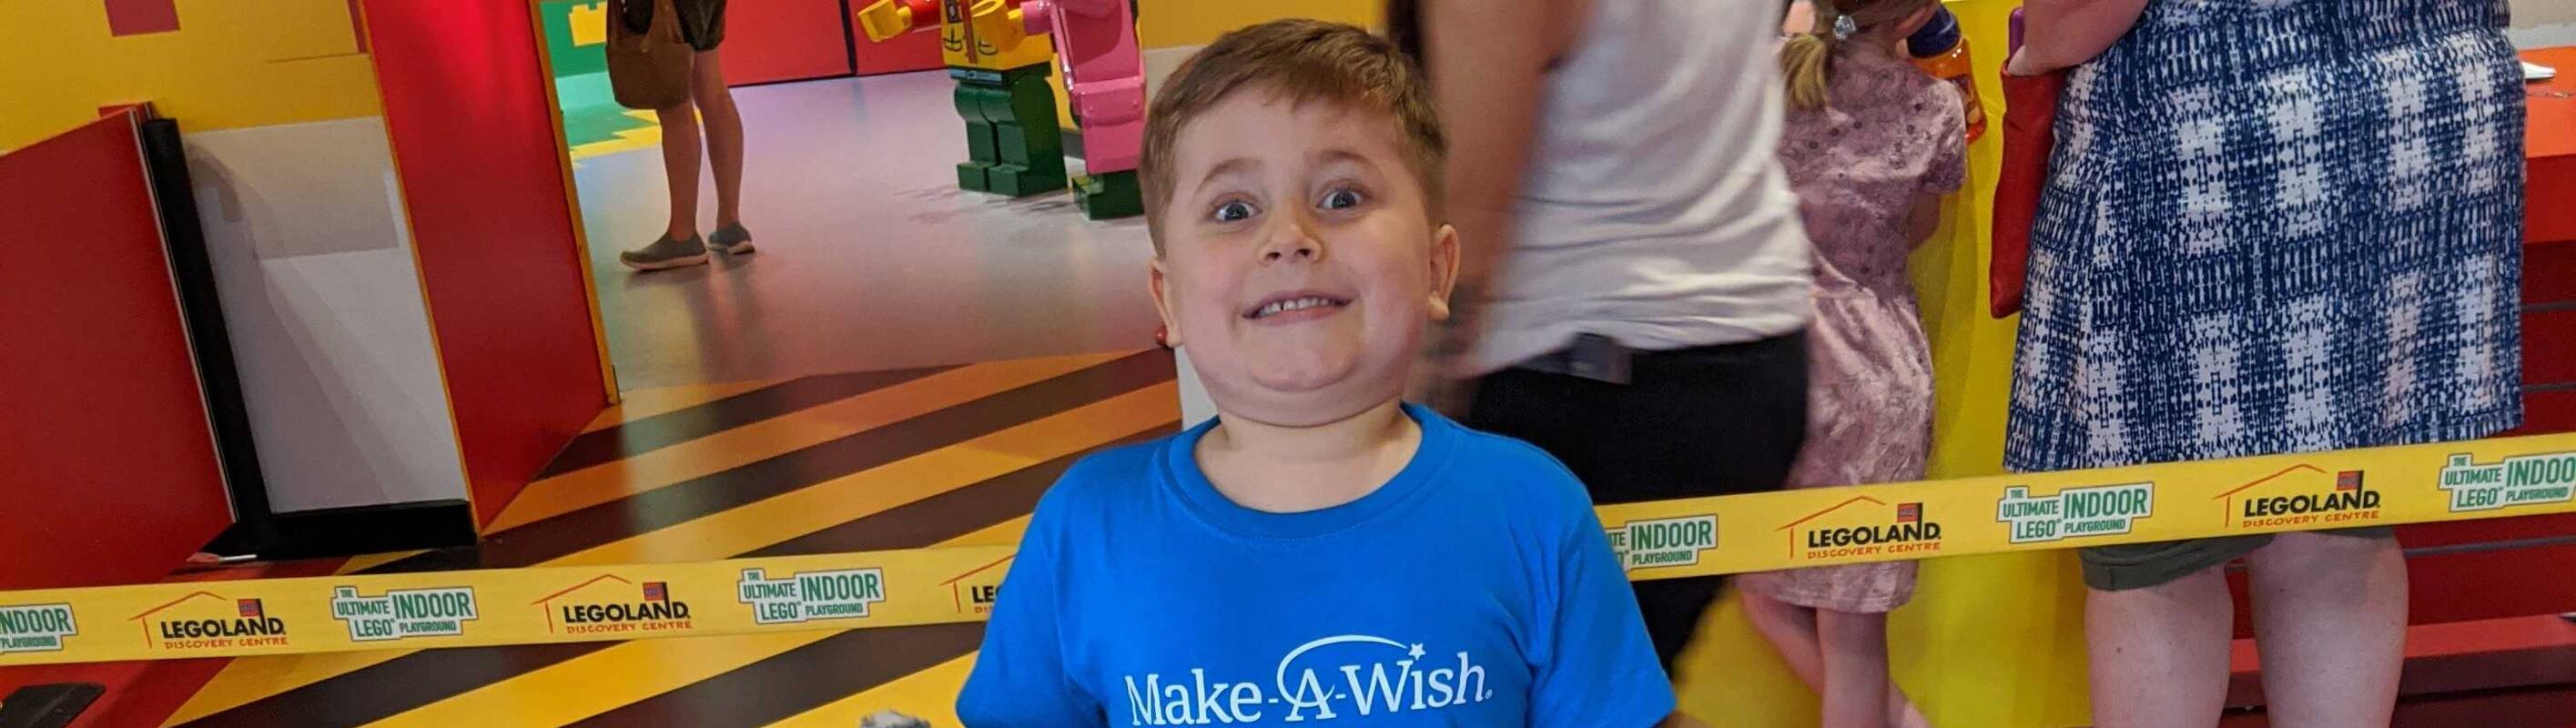 Make-A-Wish Australia wish kid Zach standing in LEGOLAND